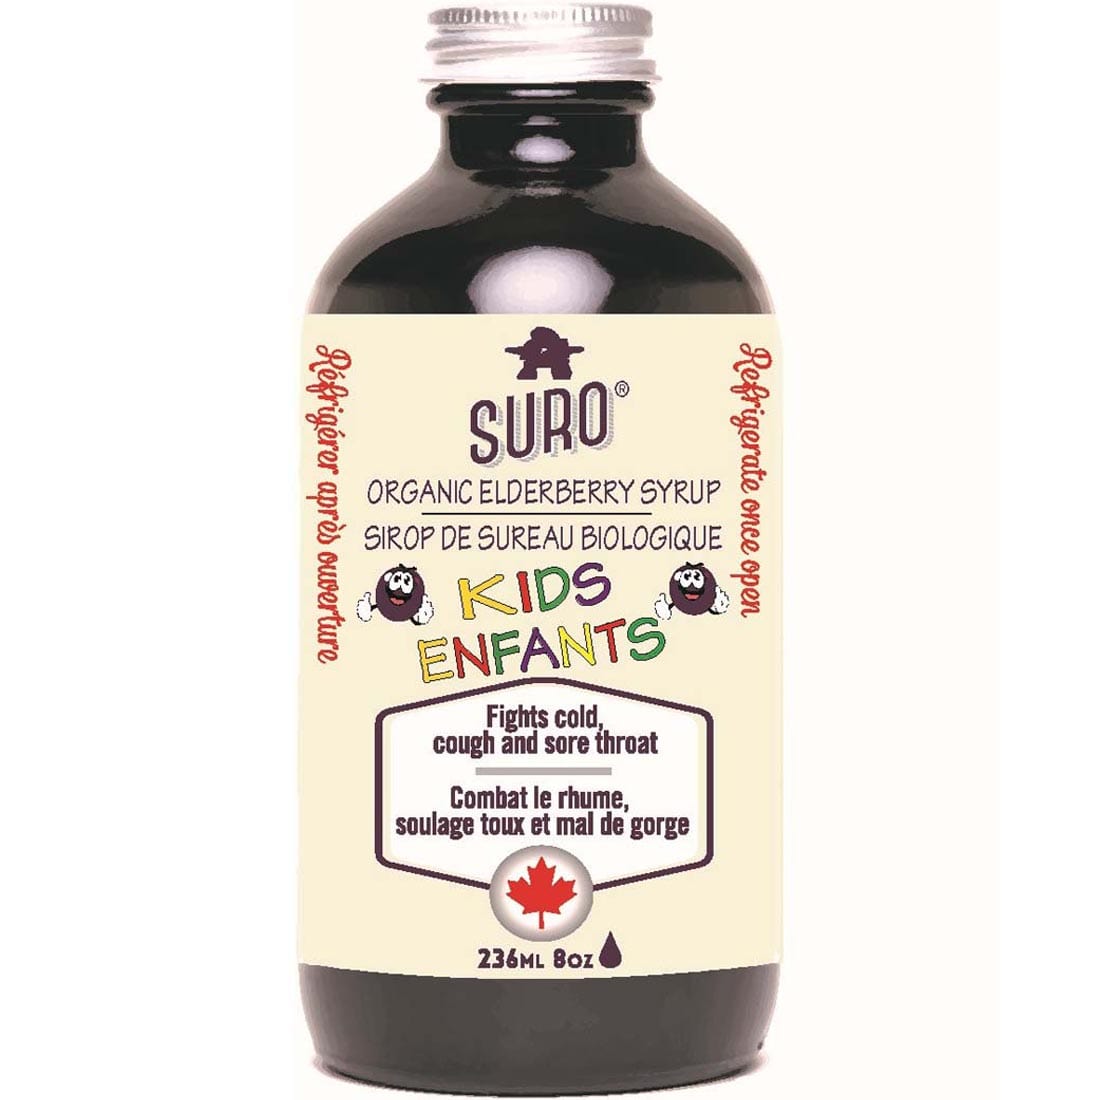 Suro Organic Elderberry Syrup for Kids, 236ml